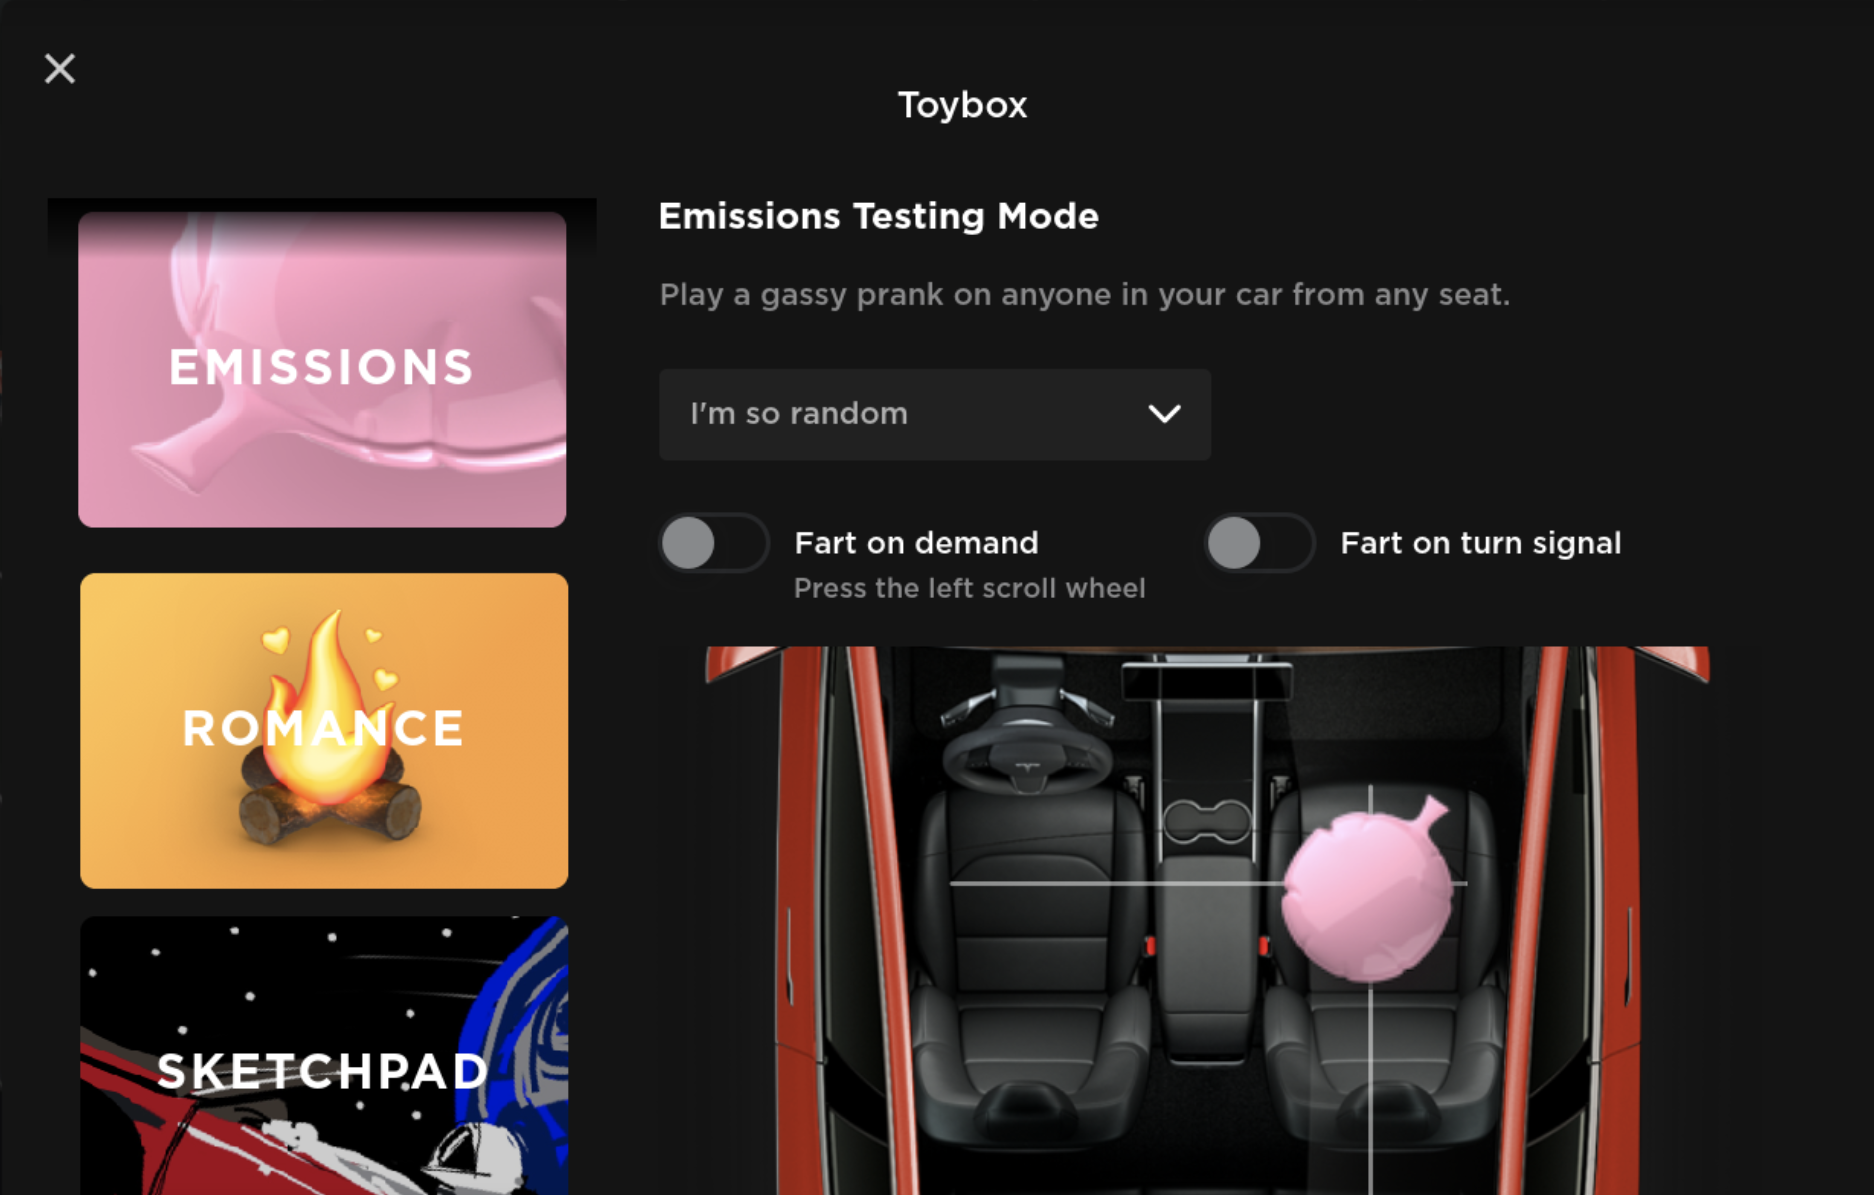 Tesla Tesla Toybox feature in update 2020.16.2.1